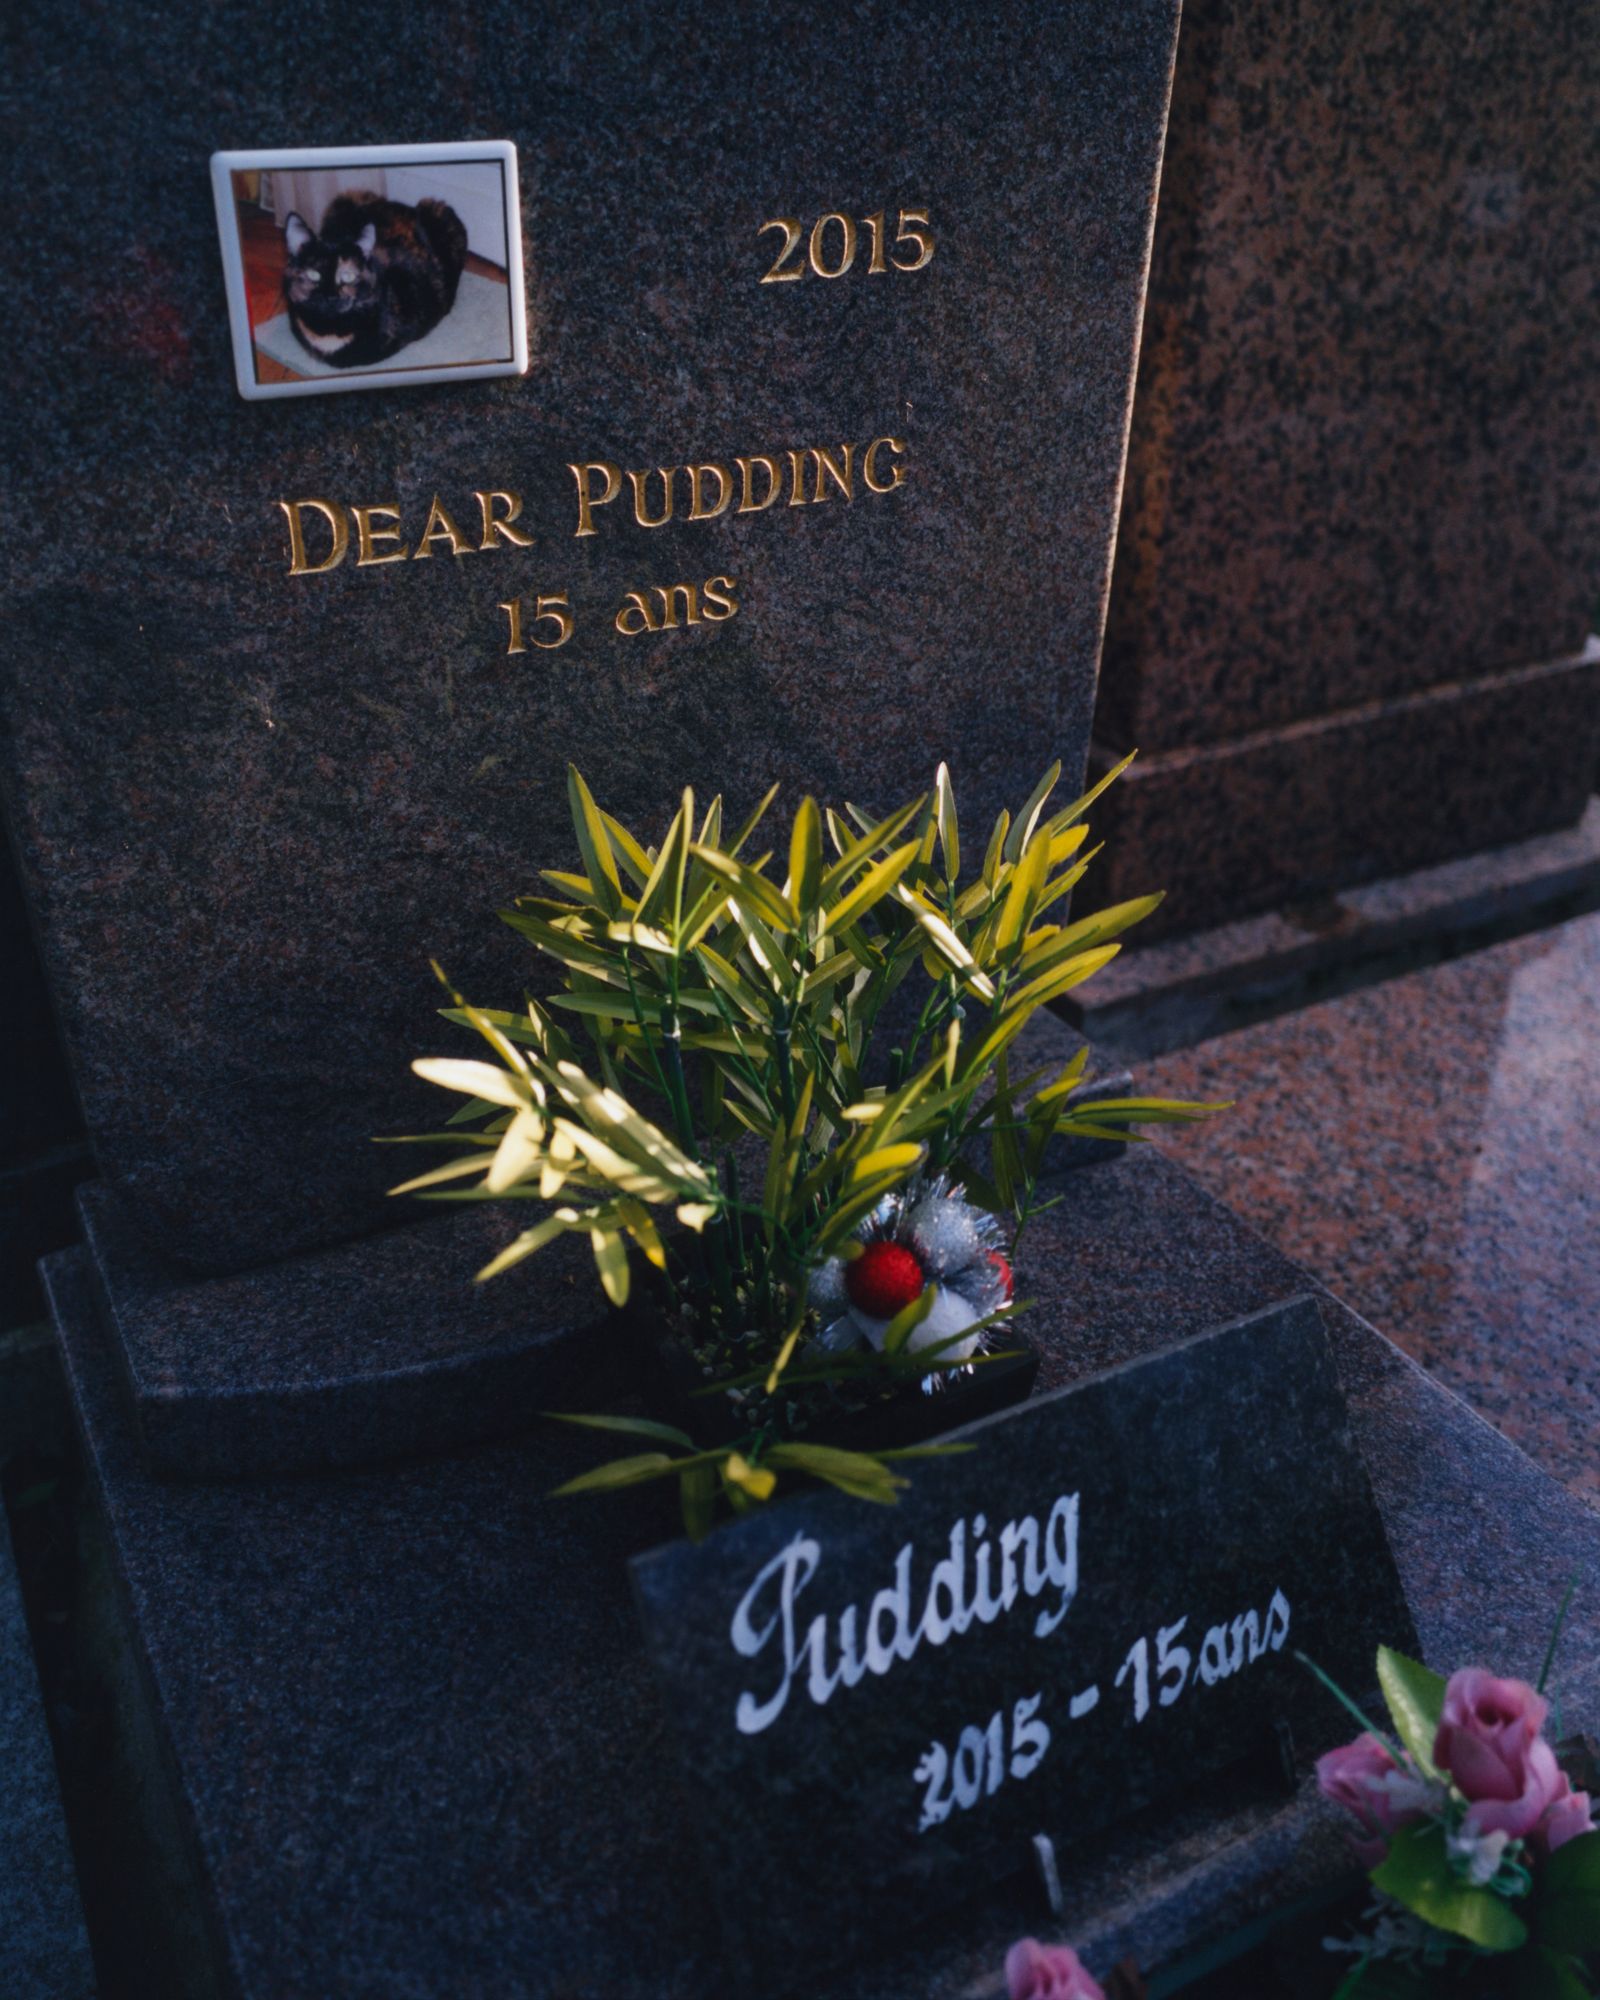 © Alexandre Silberman - Grave of Pudding